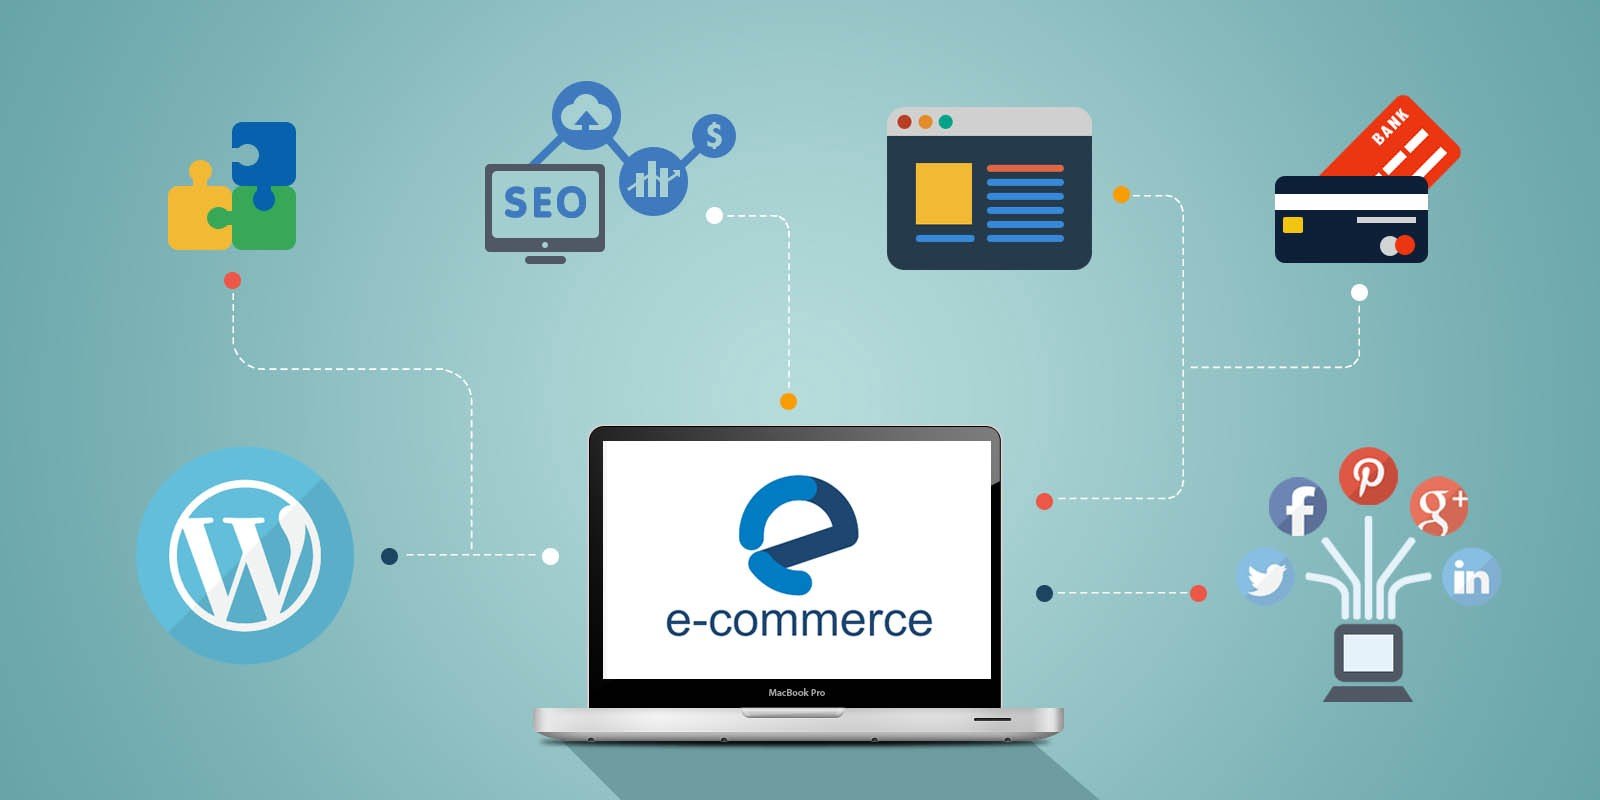 Ecommerce SEO Services